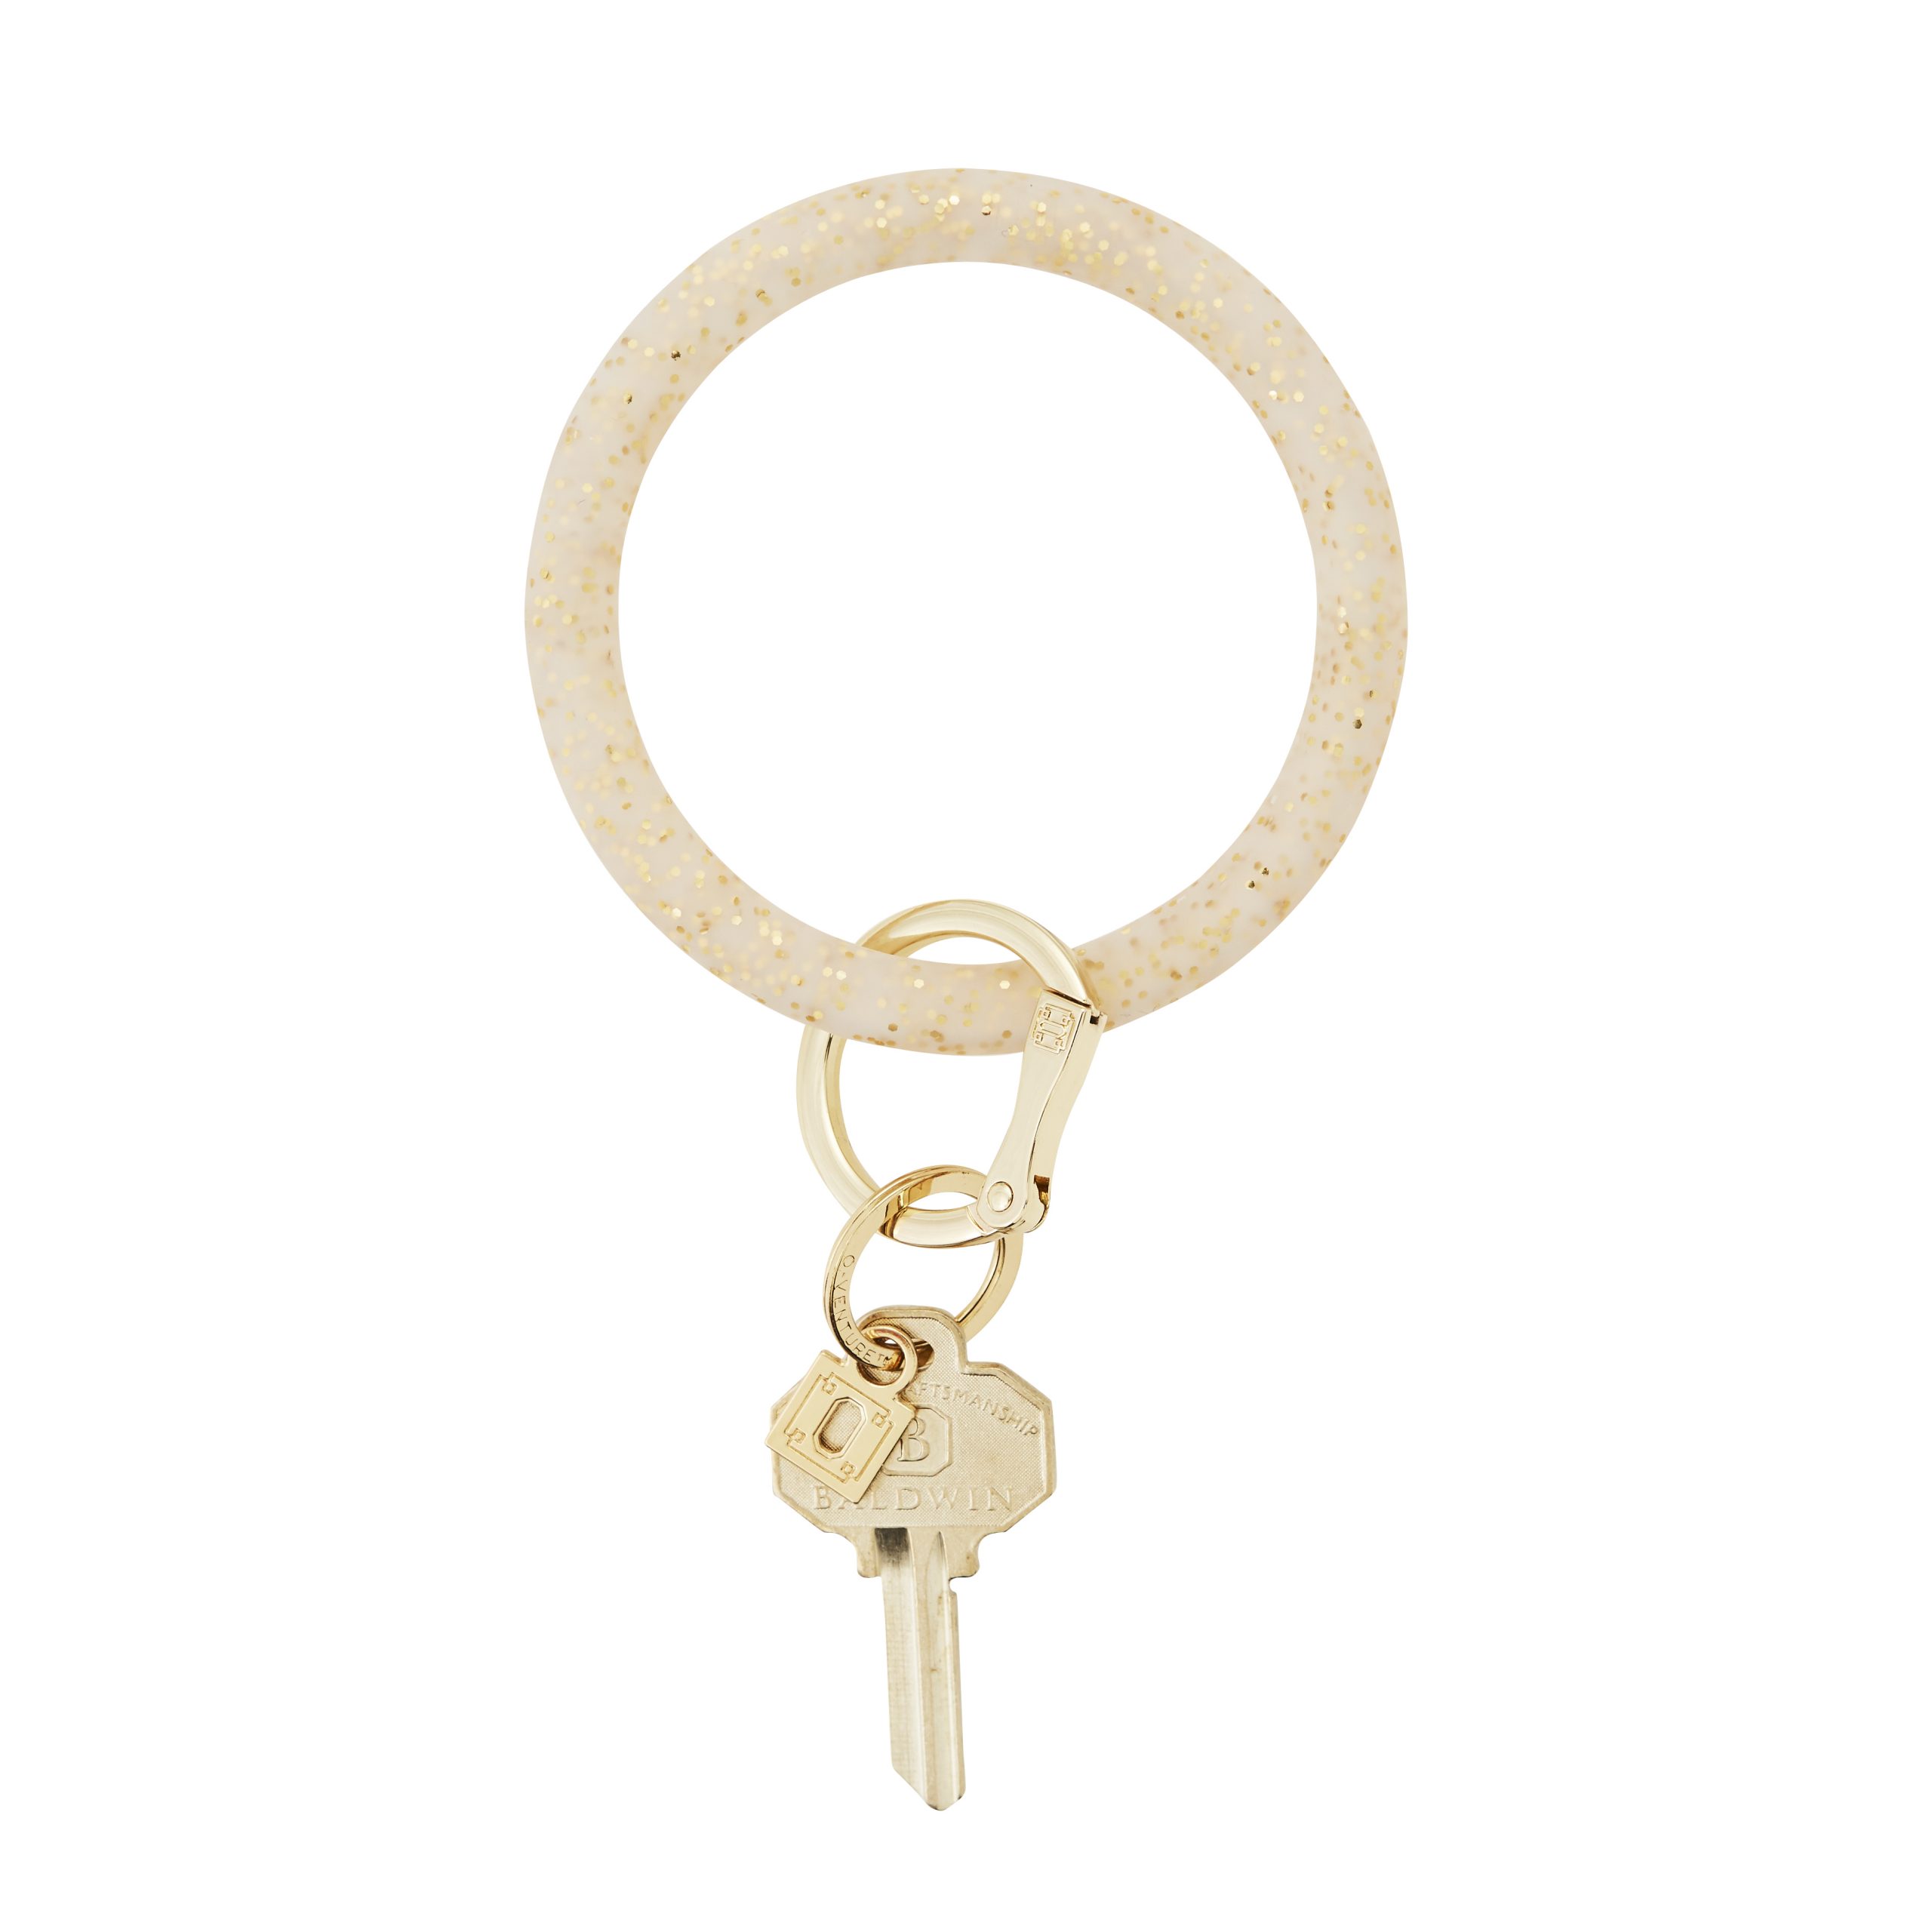 Big O Silicone Key Ring -Gold Rush Confetti - Germani's Jewelry